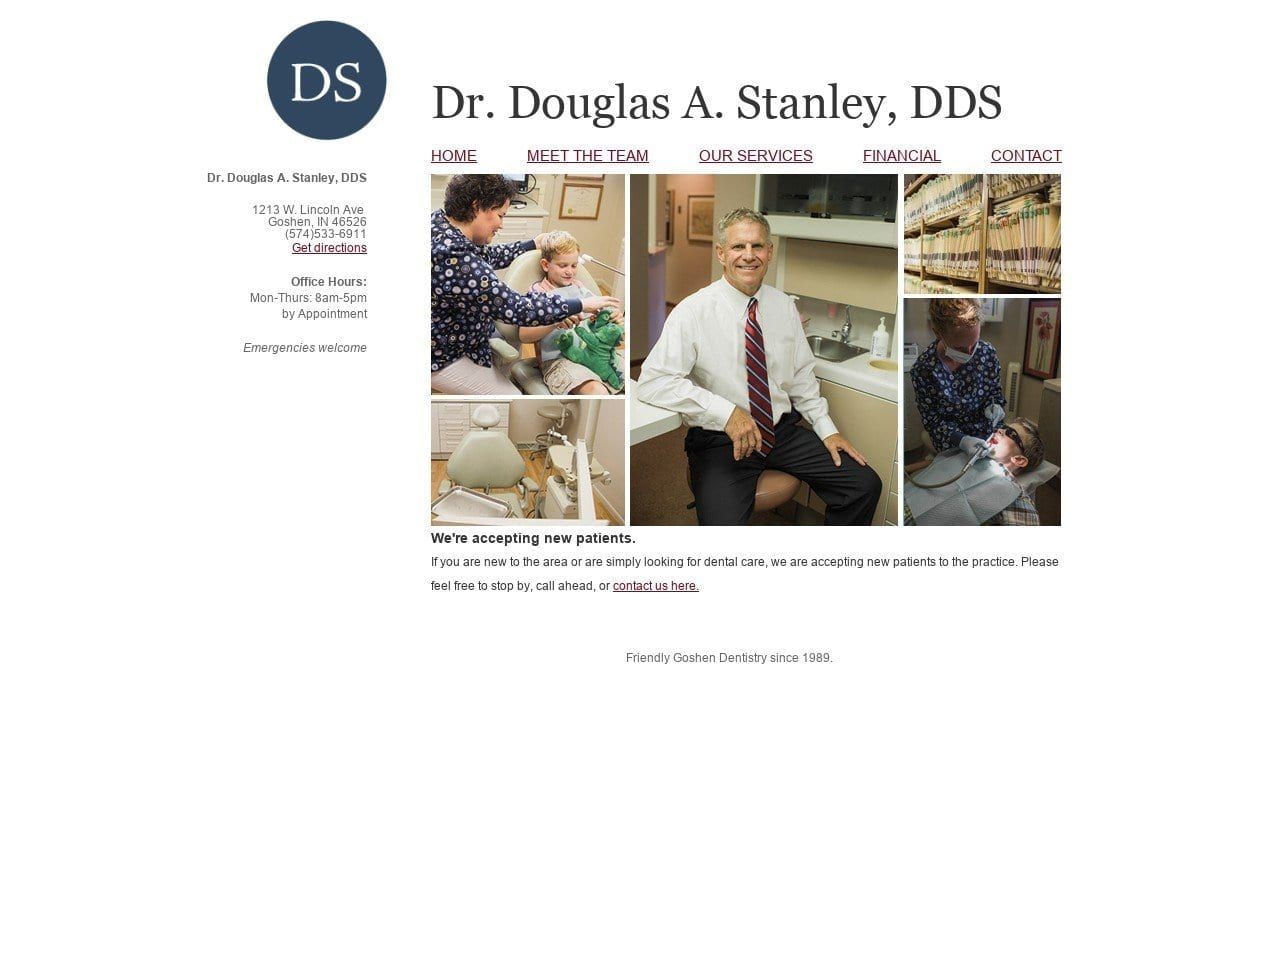 Douglas A. Stanley DDS Website Screenshot from goshendentist.com